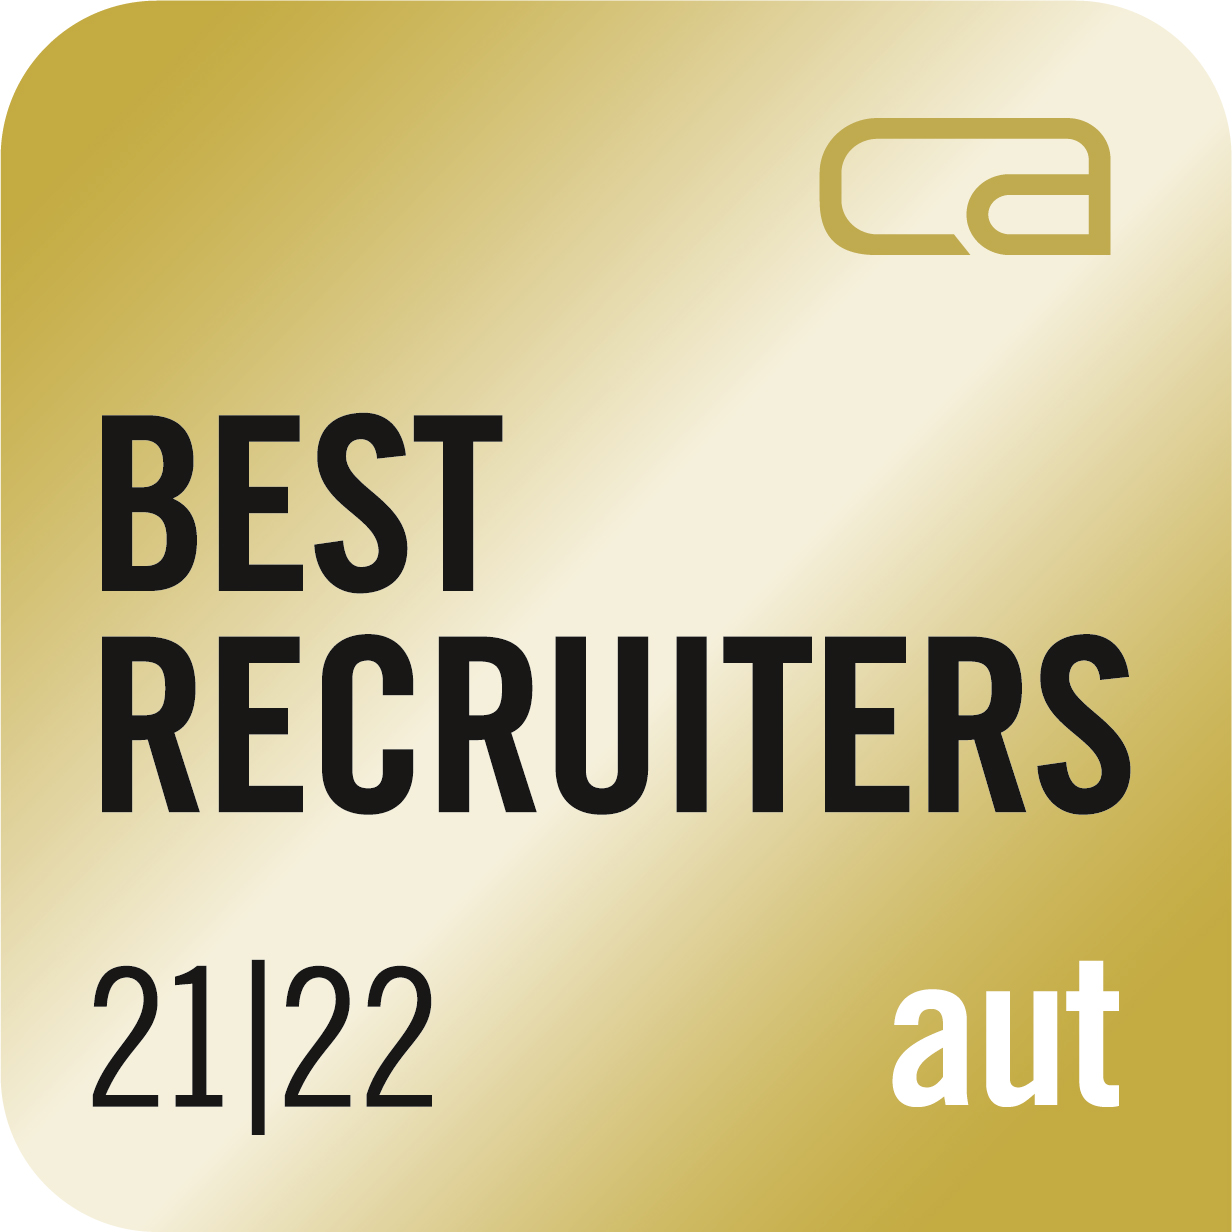 Gütesiegel Best Recruiters in Gold 2022